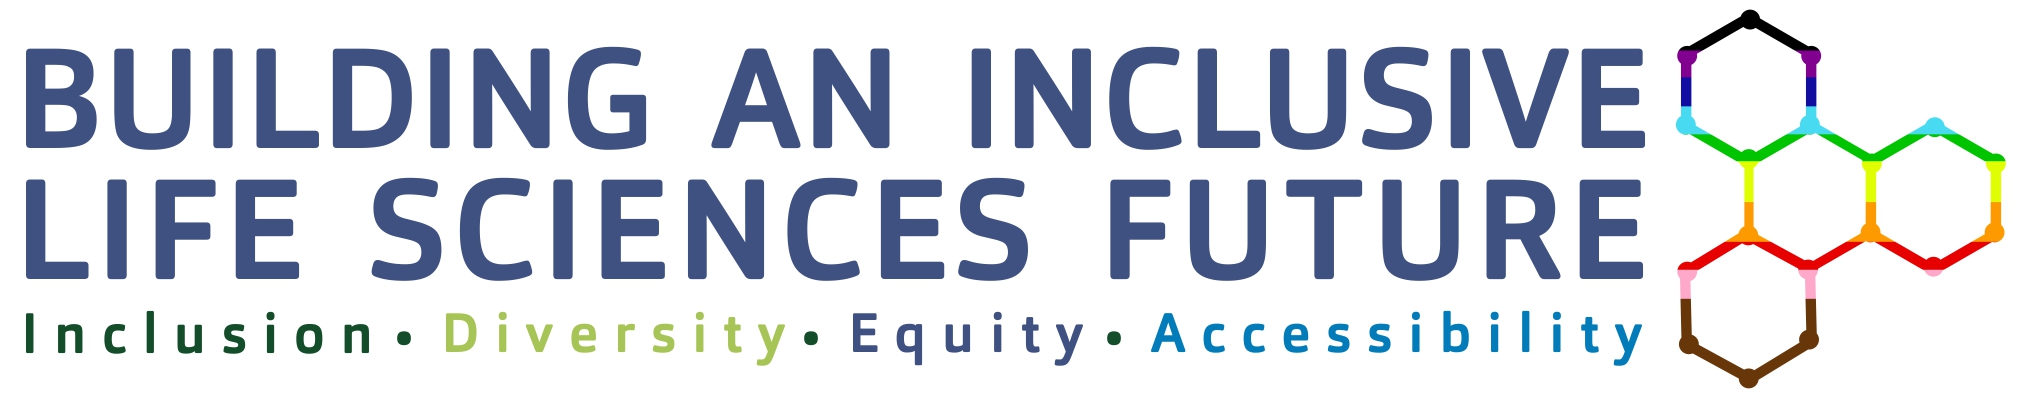 Building An Inclusive LS Future Logo Final